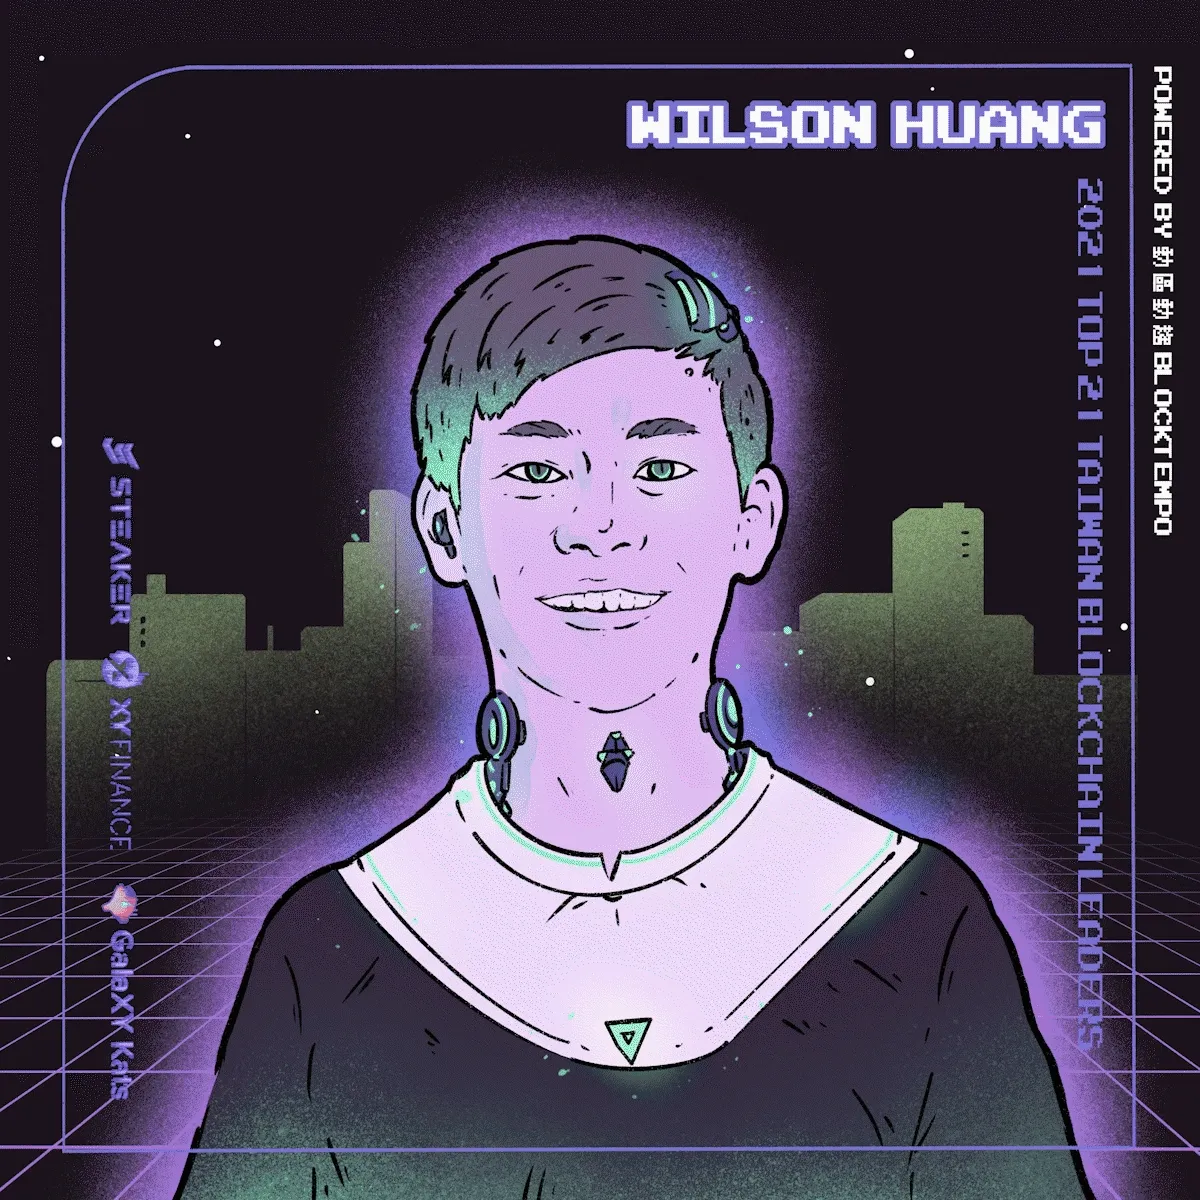 Wilson Huang